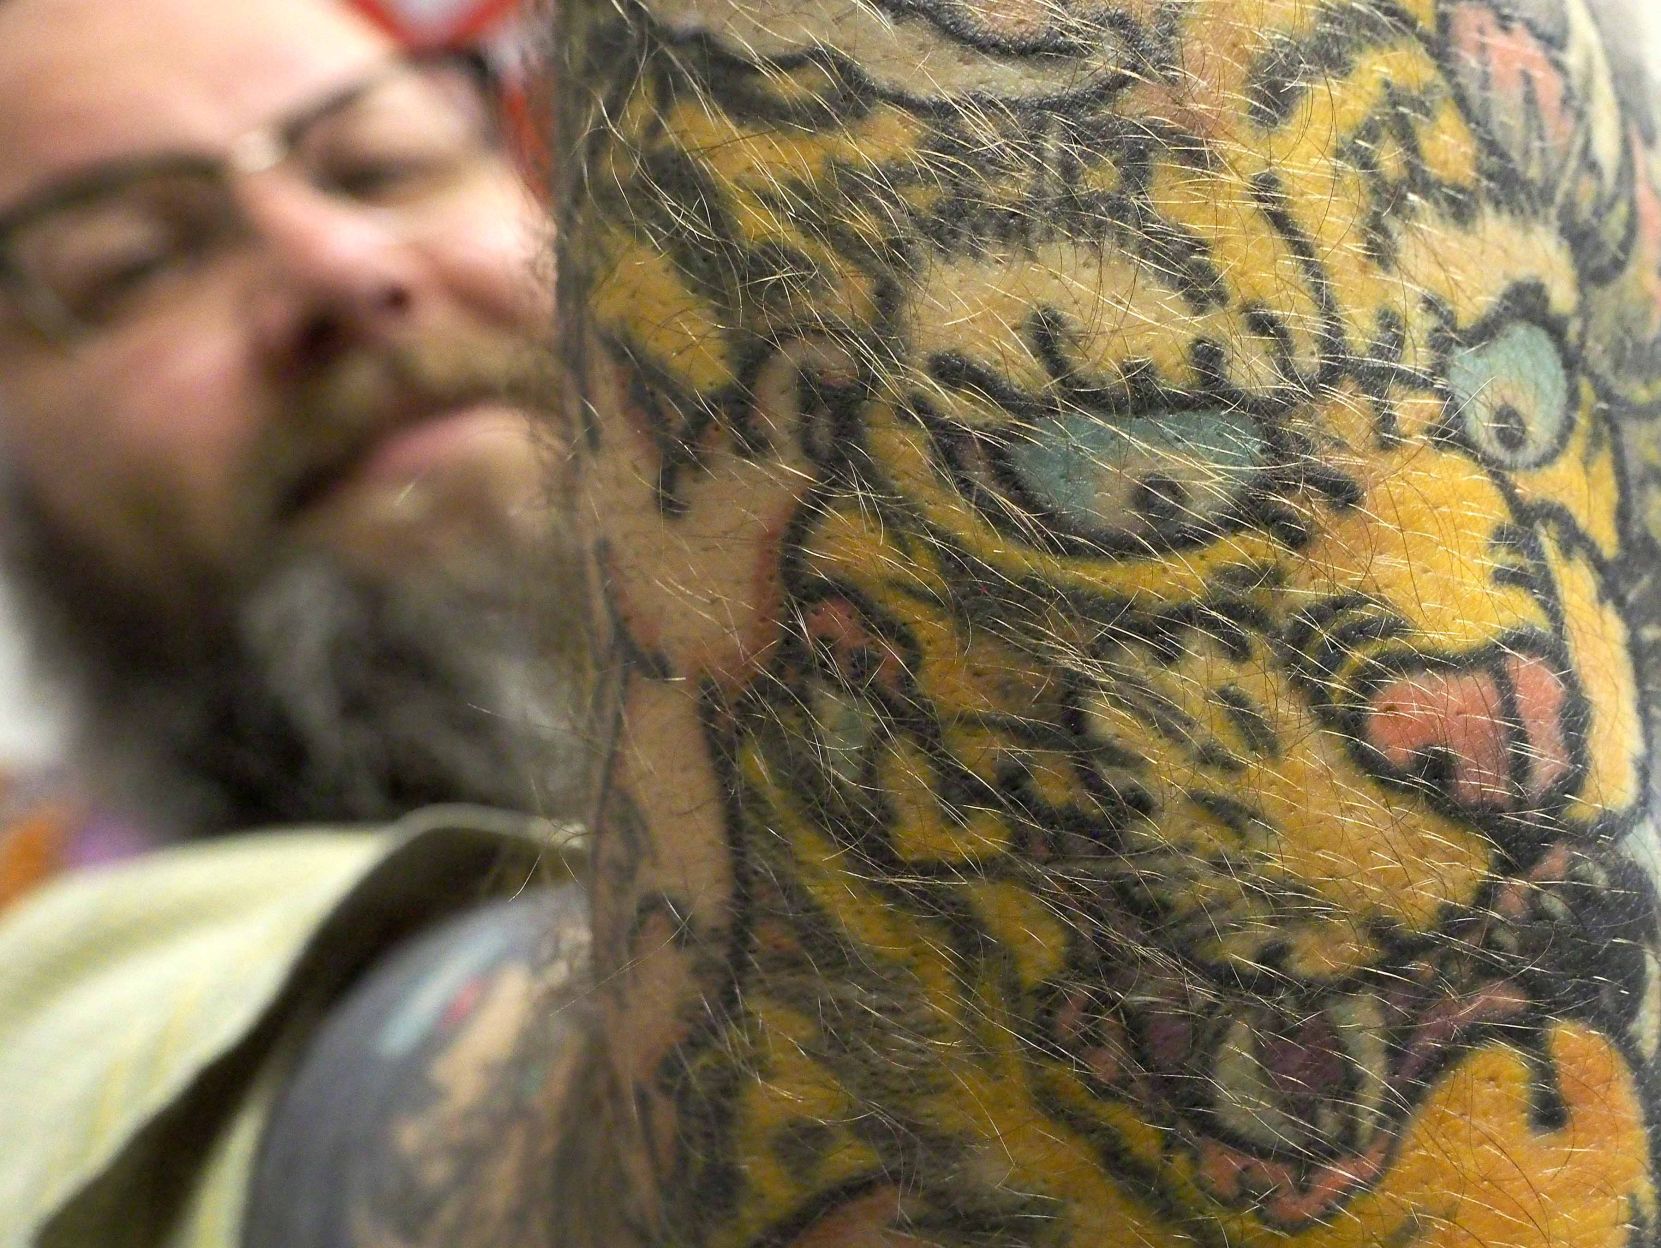 Professor Layton, by Jaz Martin an apprentice at Northern Glory, Newcastle  UK - freshly done : r/tattoos